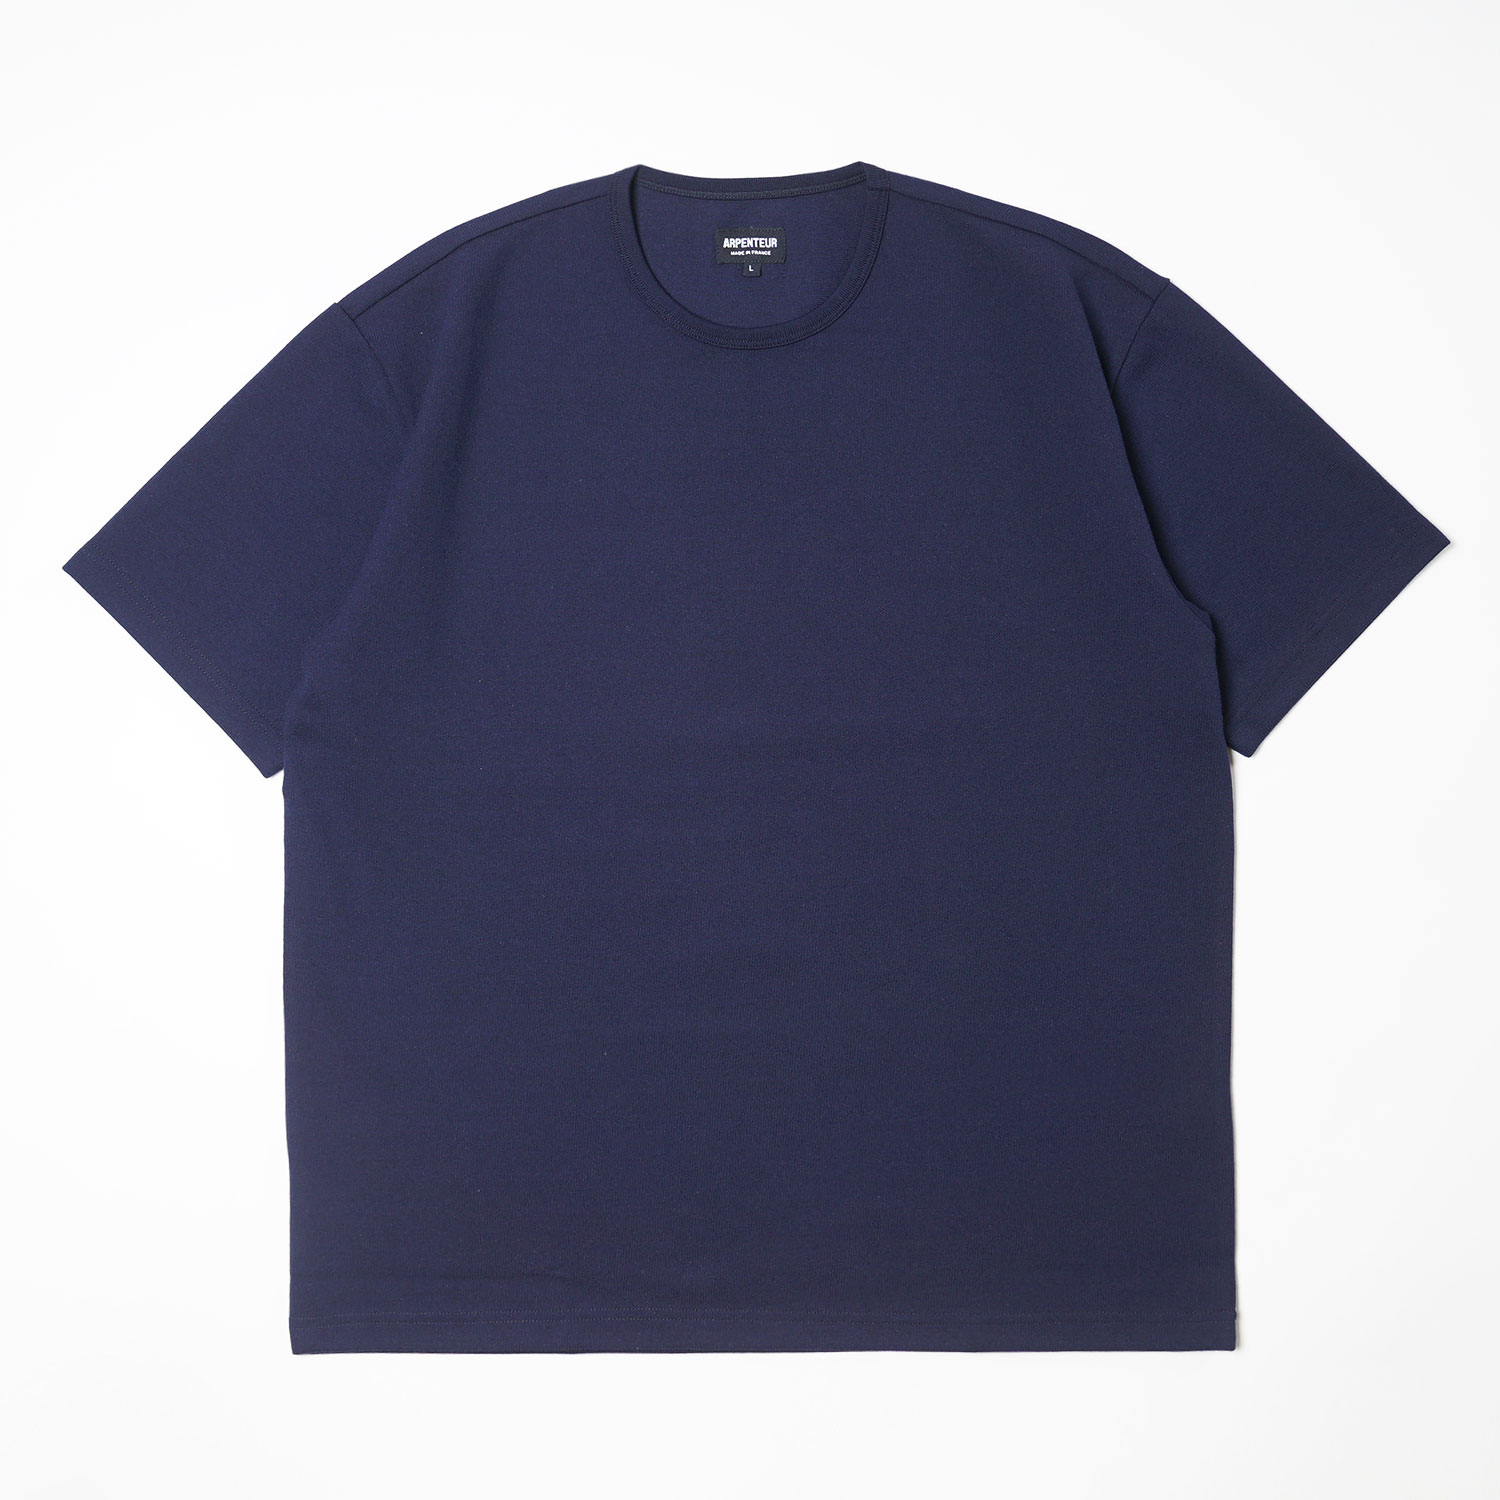 RACHEL t-shirt in Dark blue color by Arpenteur